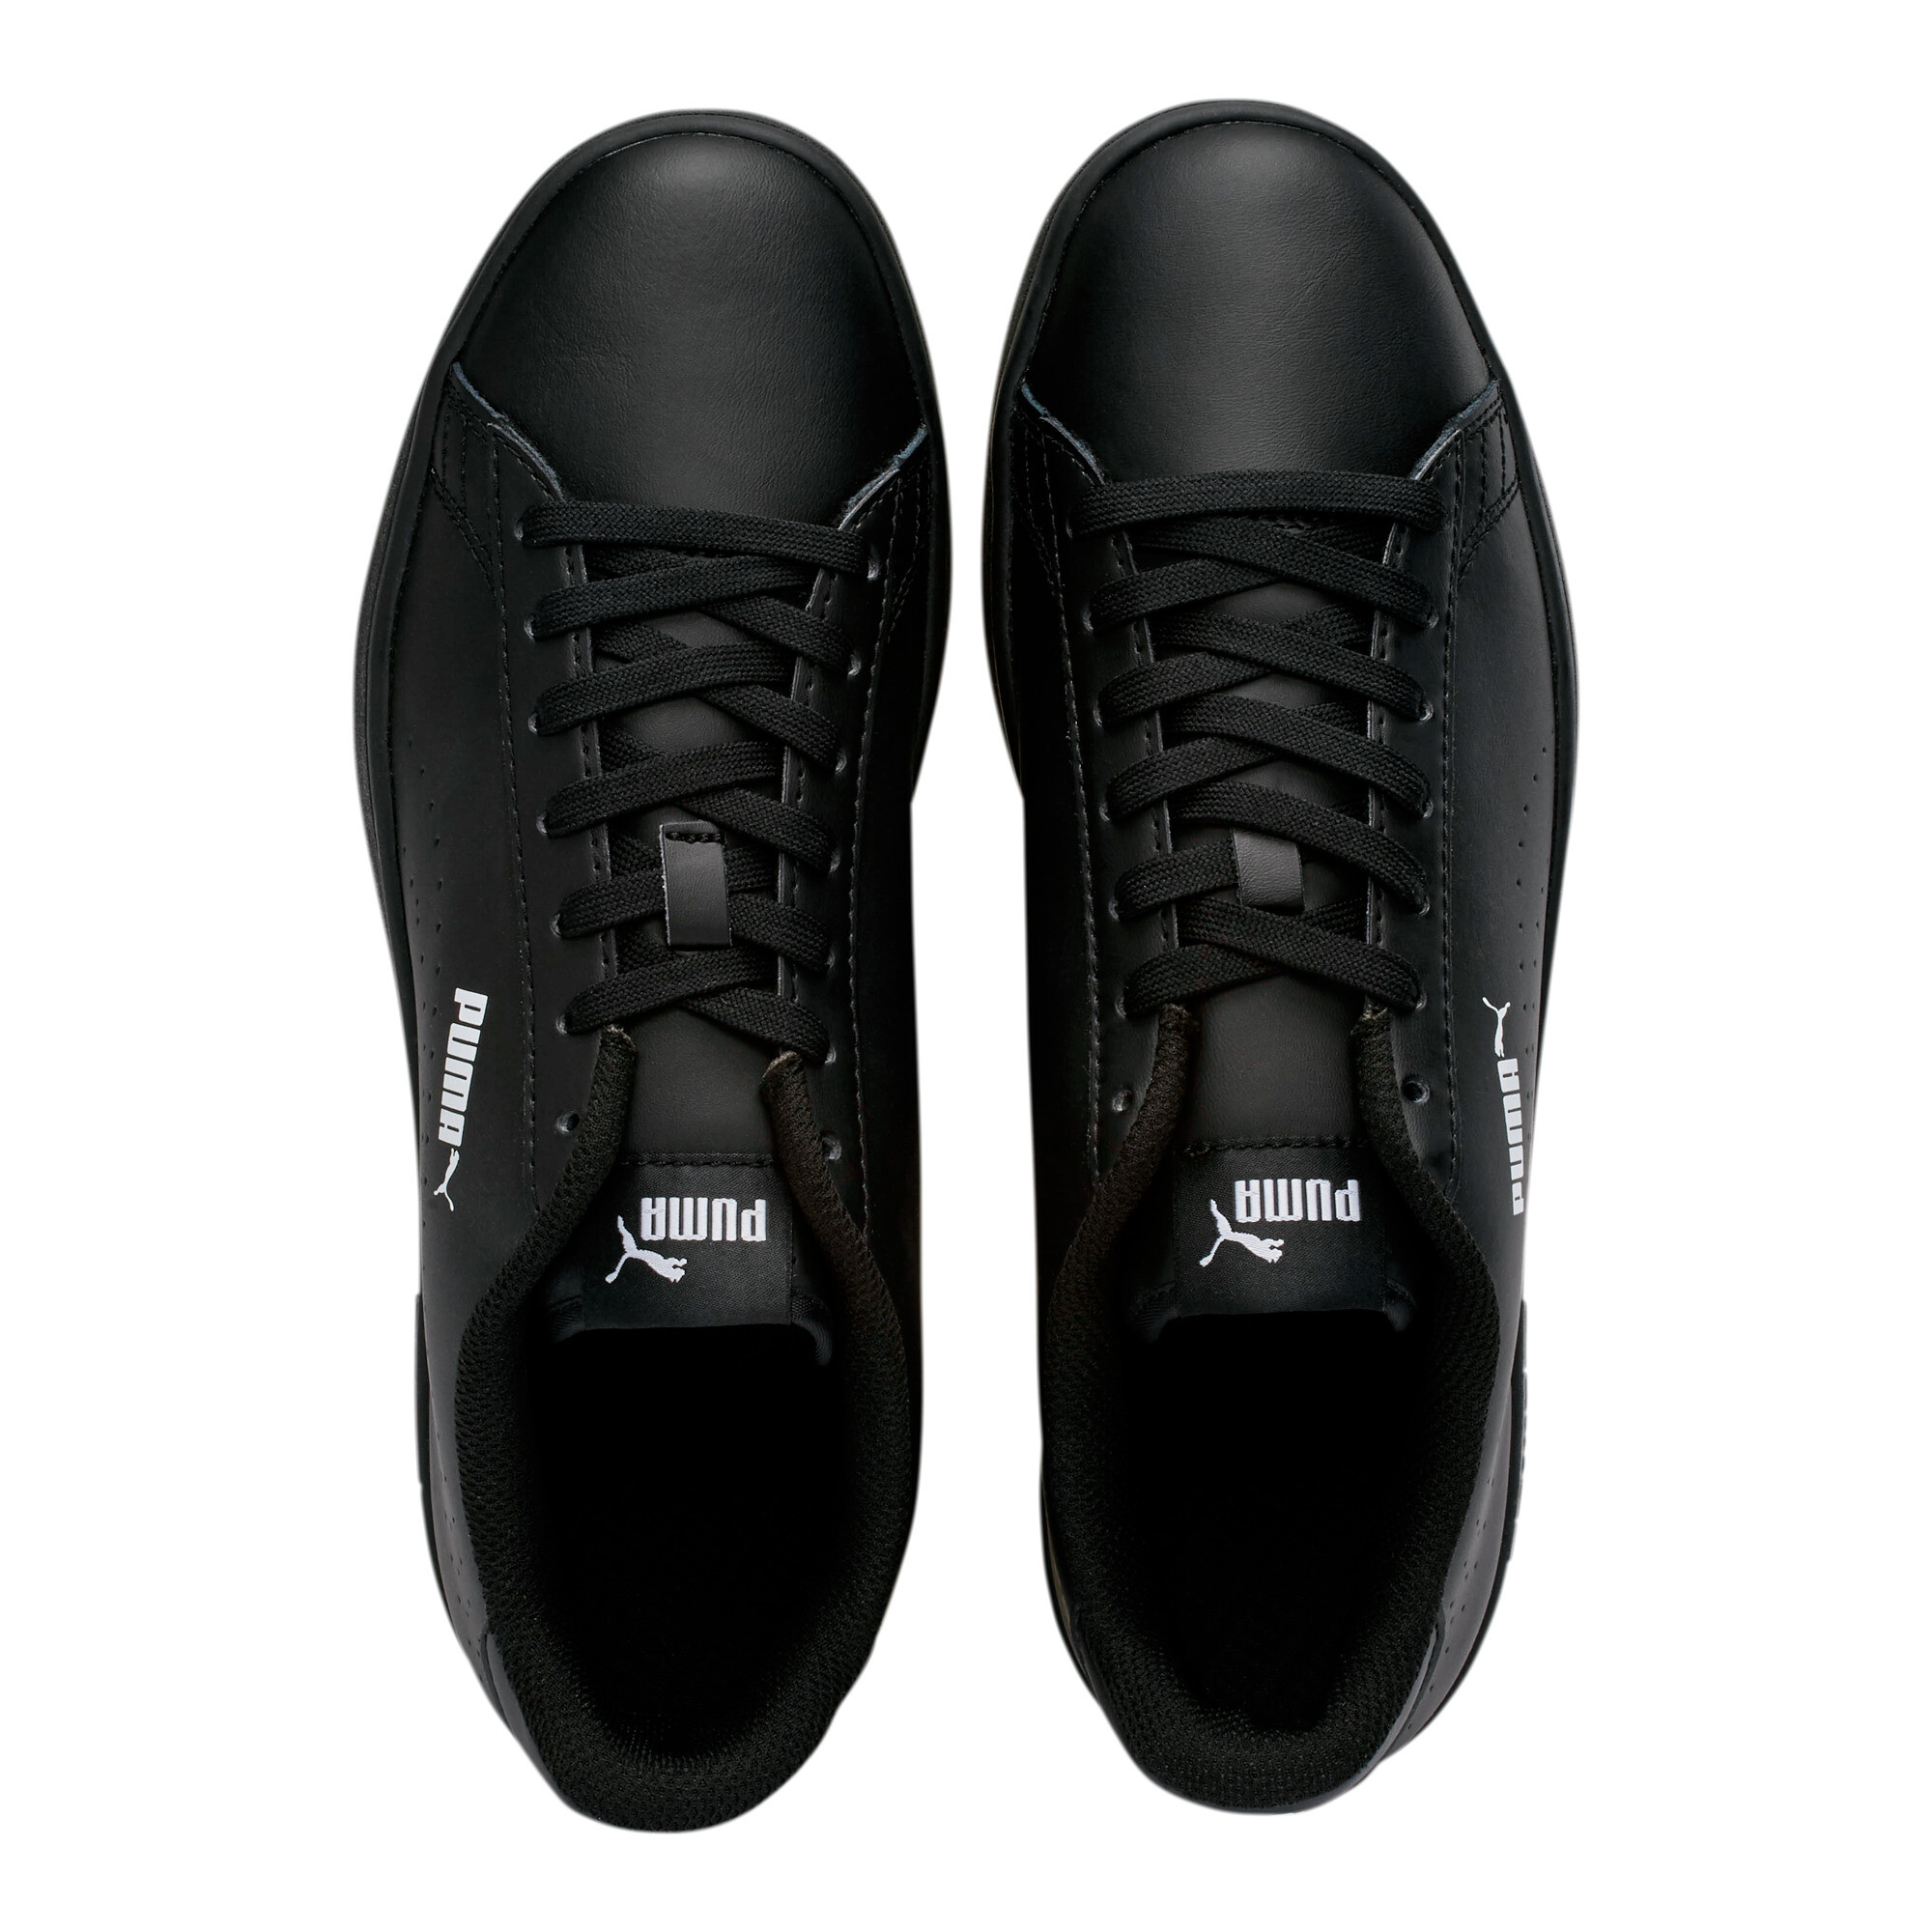 PUMA PUMA Smash v2 Leather Perf Sneakers Men Shoe Basics | eBay